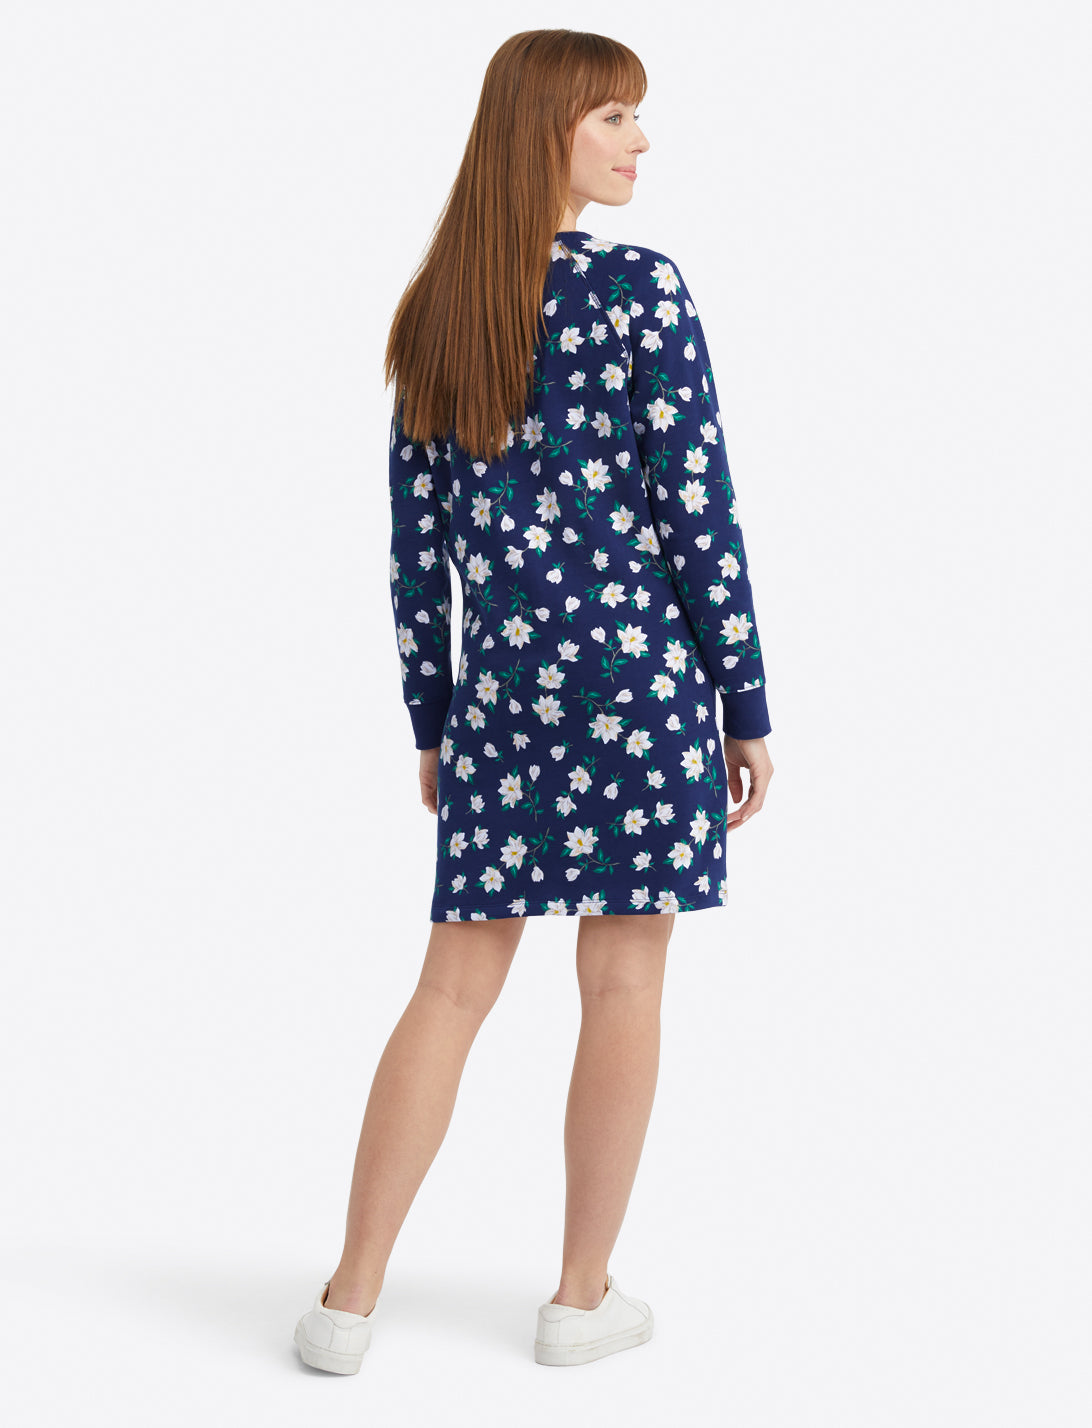 Natalie Sweatshirt Dress in Magnolia – Draper James